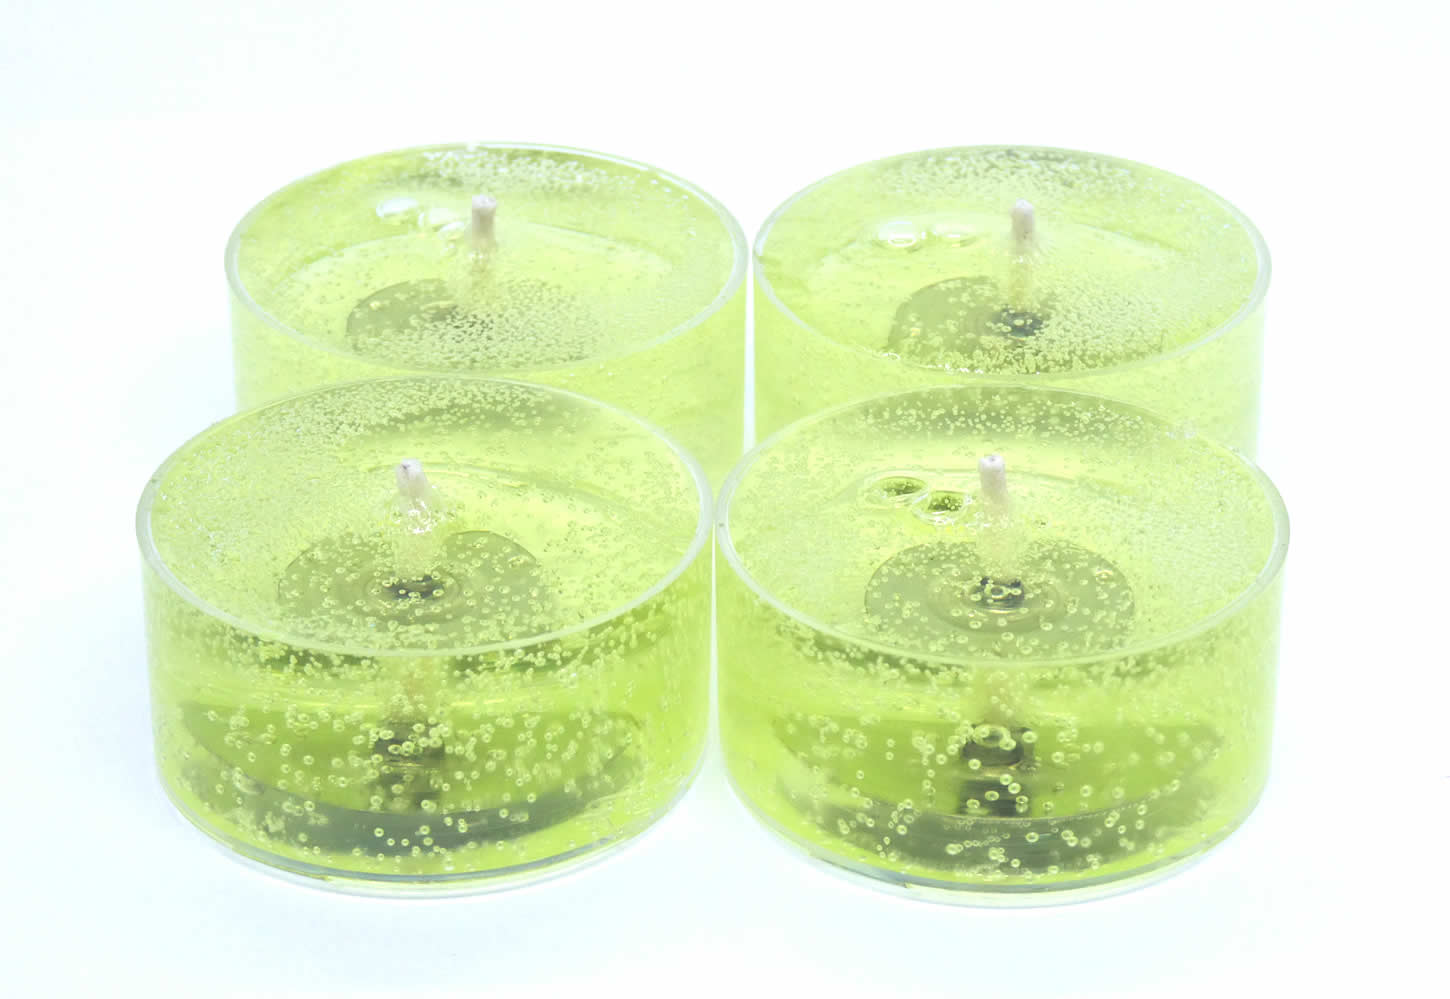 Coconut Lime Scented Gel Candle Tea Lights - 4 pk.